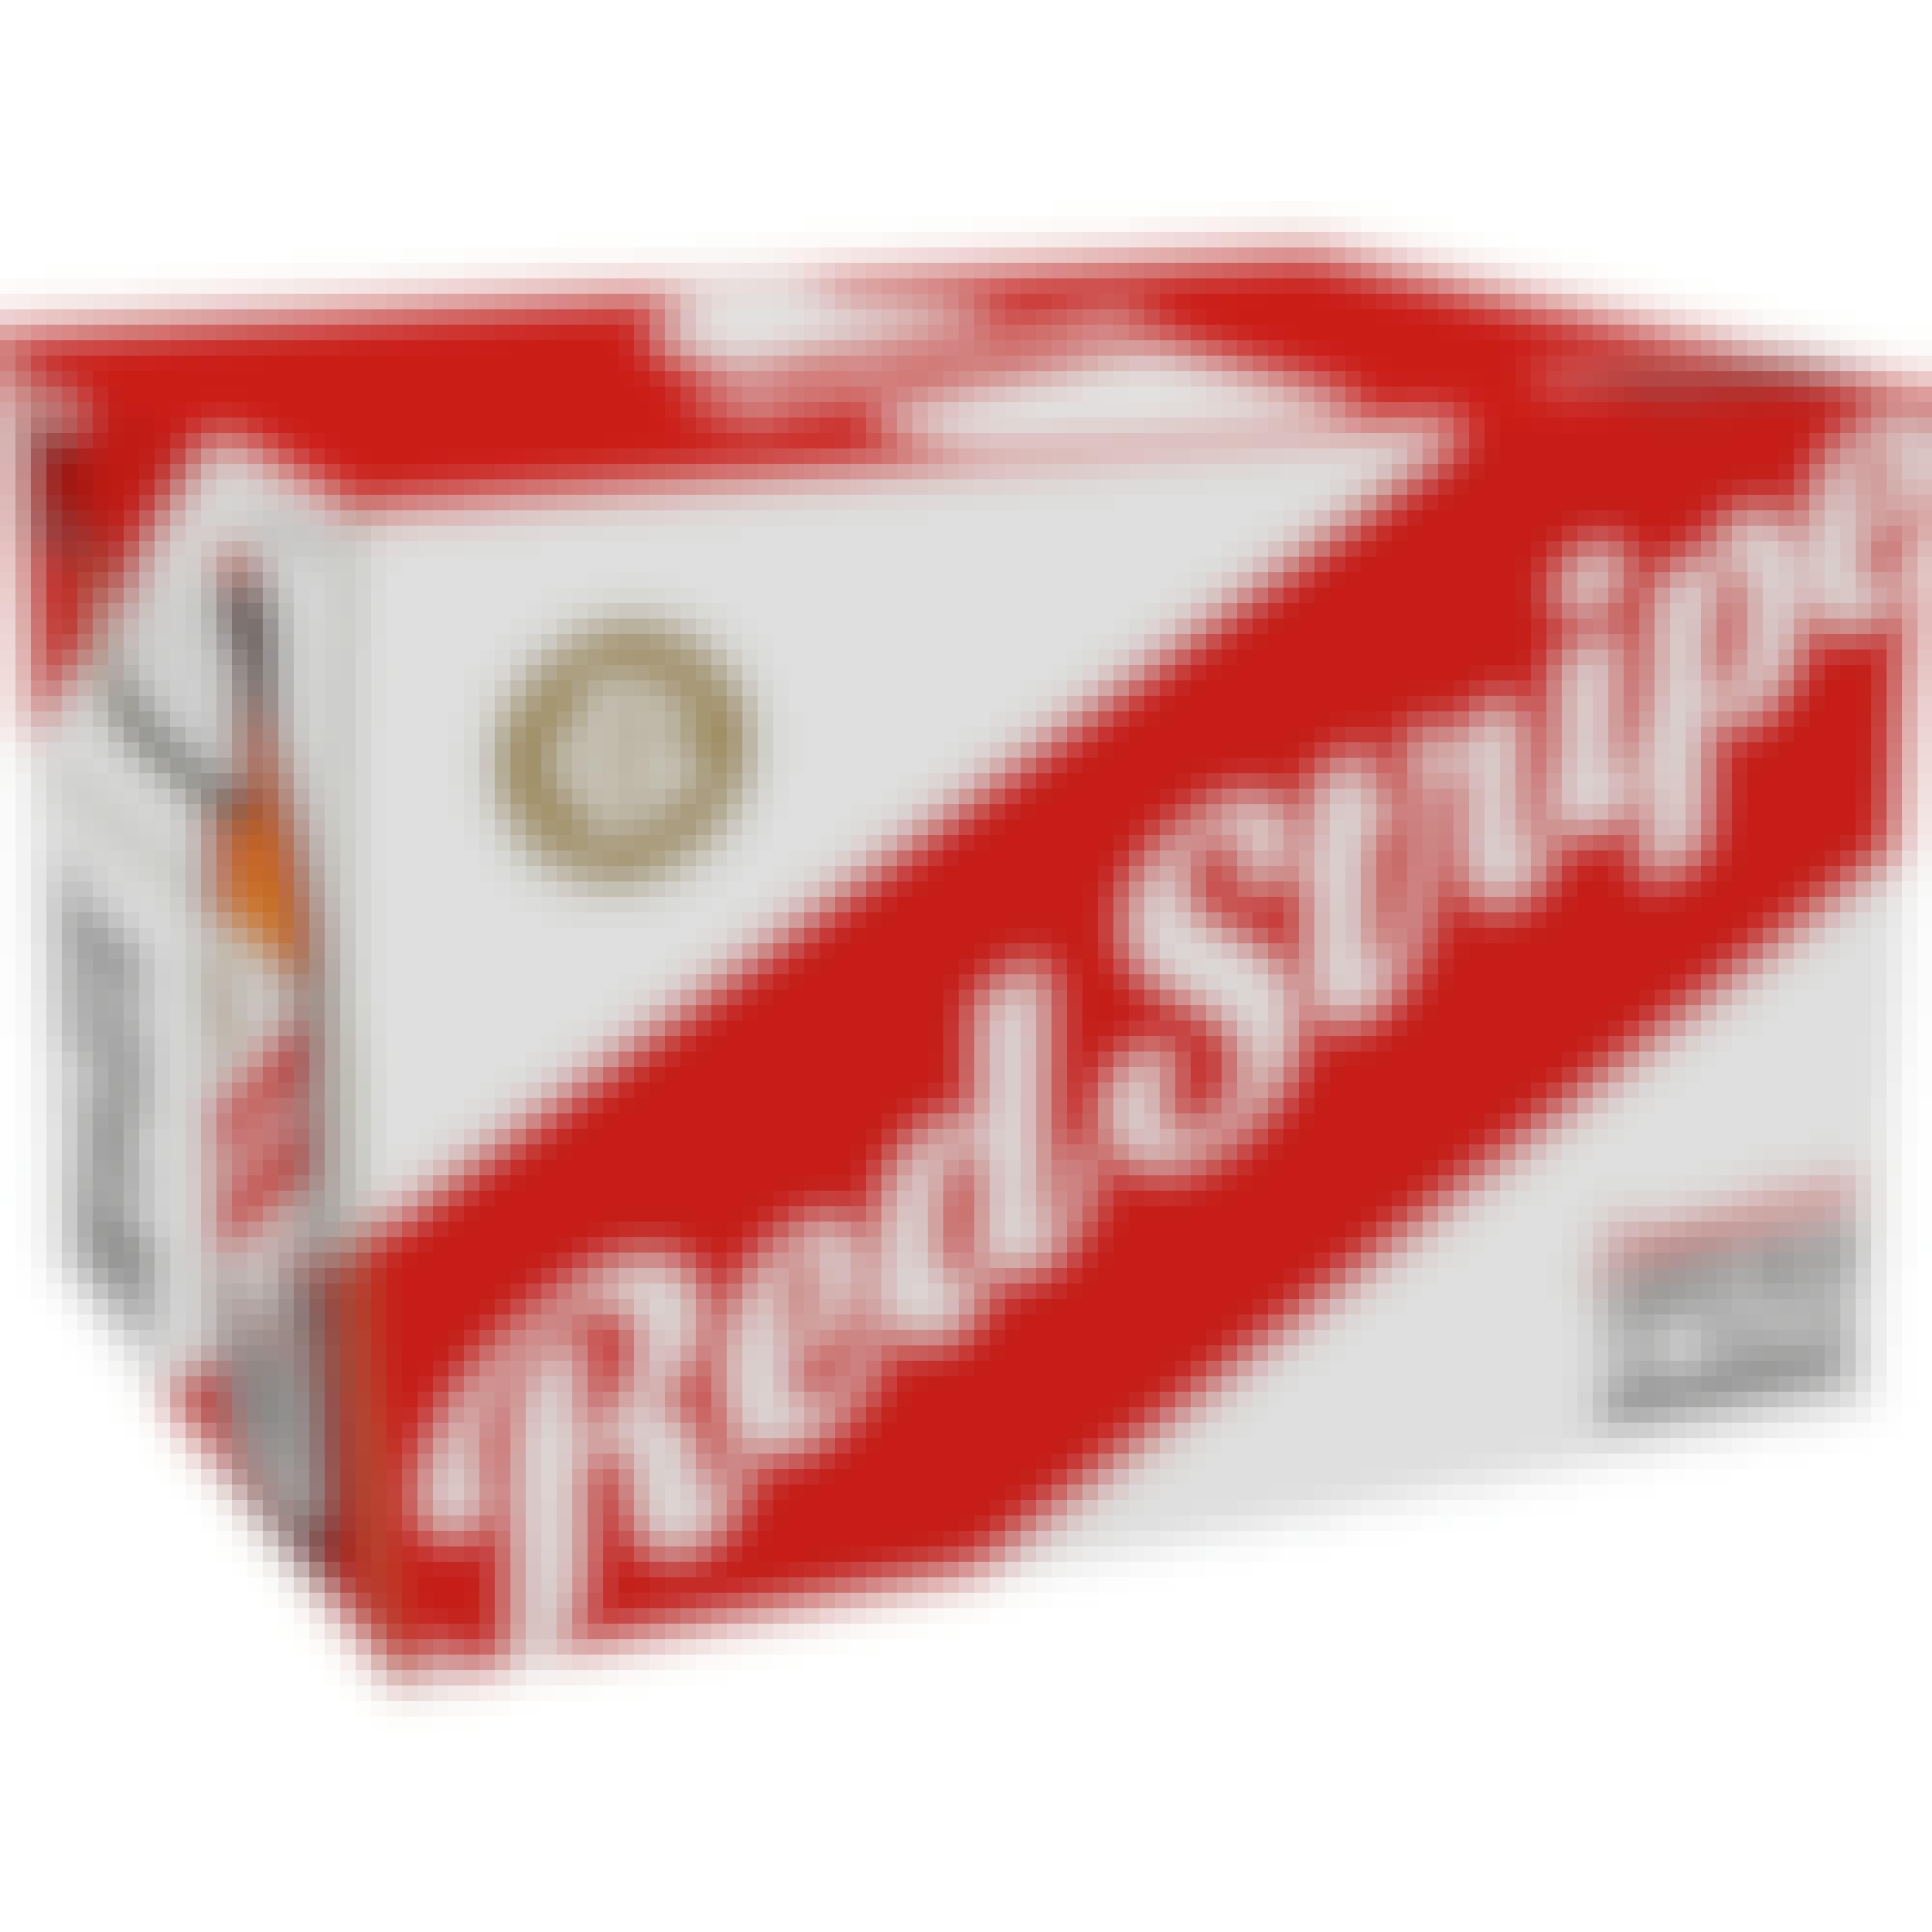 Red Stripe Jamaican Lager 12 pack 12 oz. Bottle